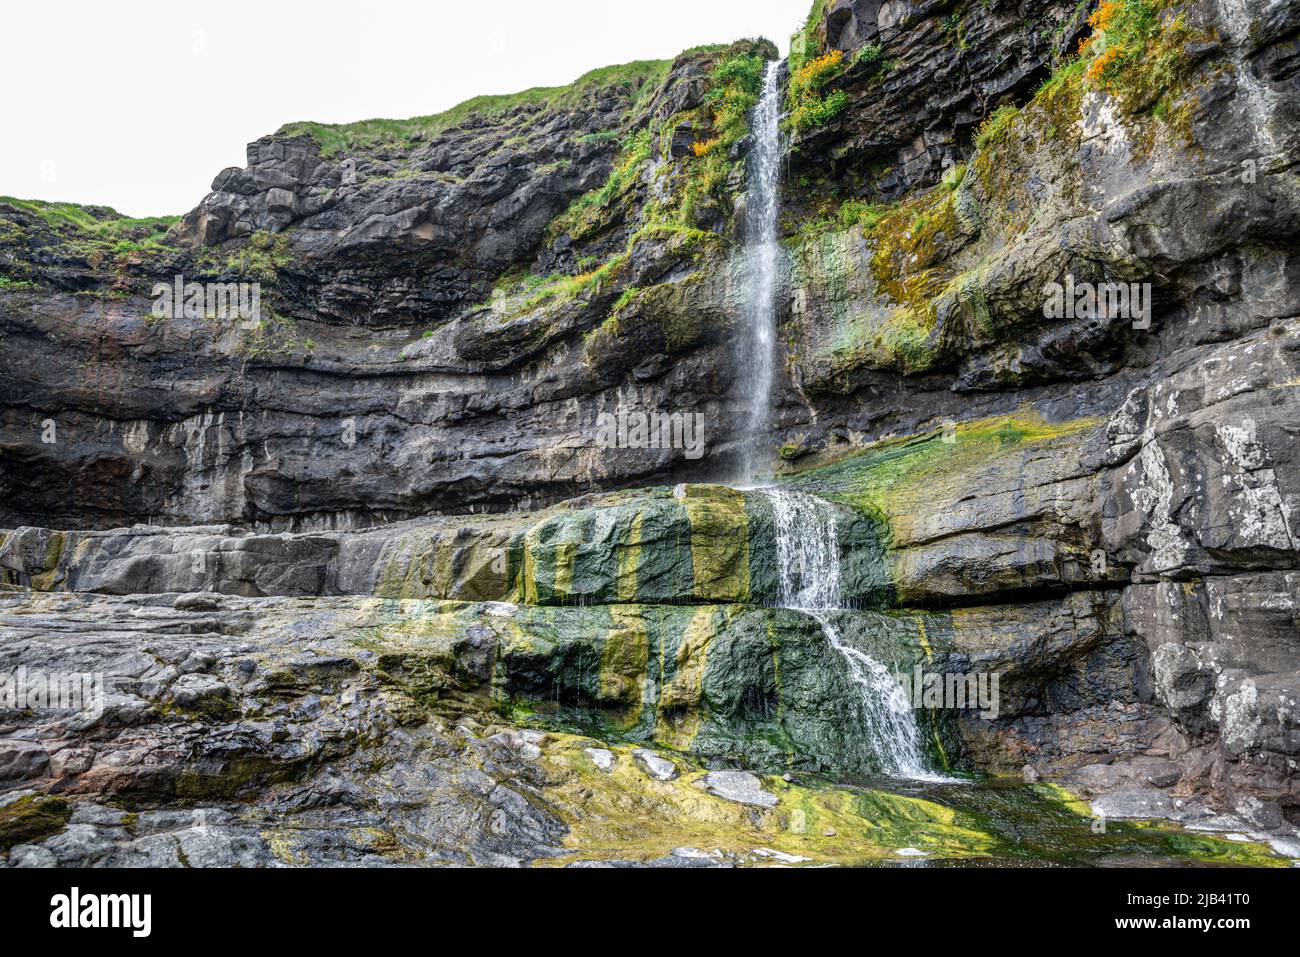 Small waterfall on Mikladalur cliffs, Kalsoy Island, Faroe Islands Stock Photo